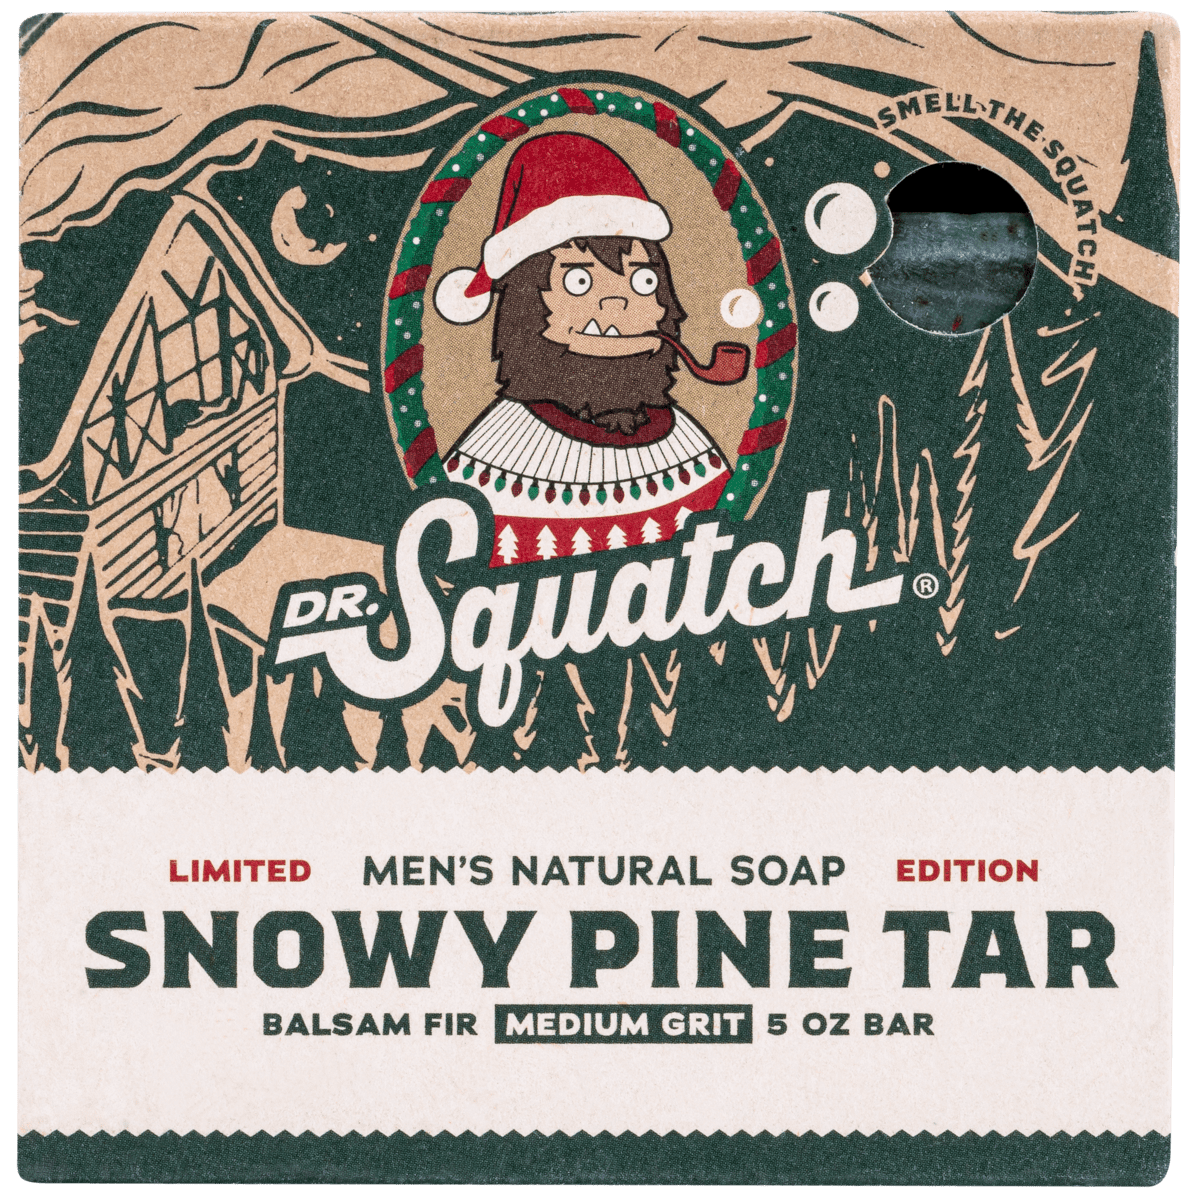 Pine Tar Soap Recipe  Dr. Squatch Copycat Recipe - The Everyday Farmhouse